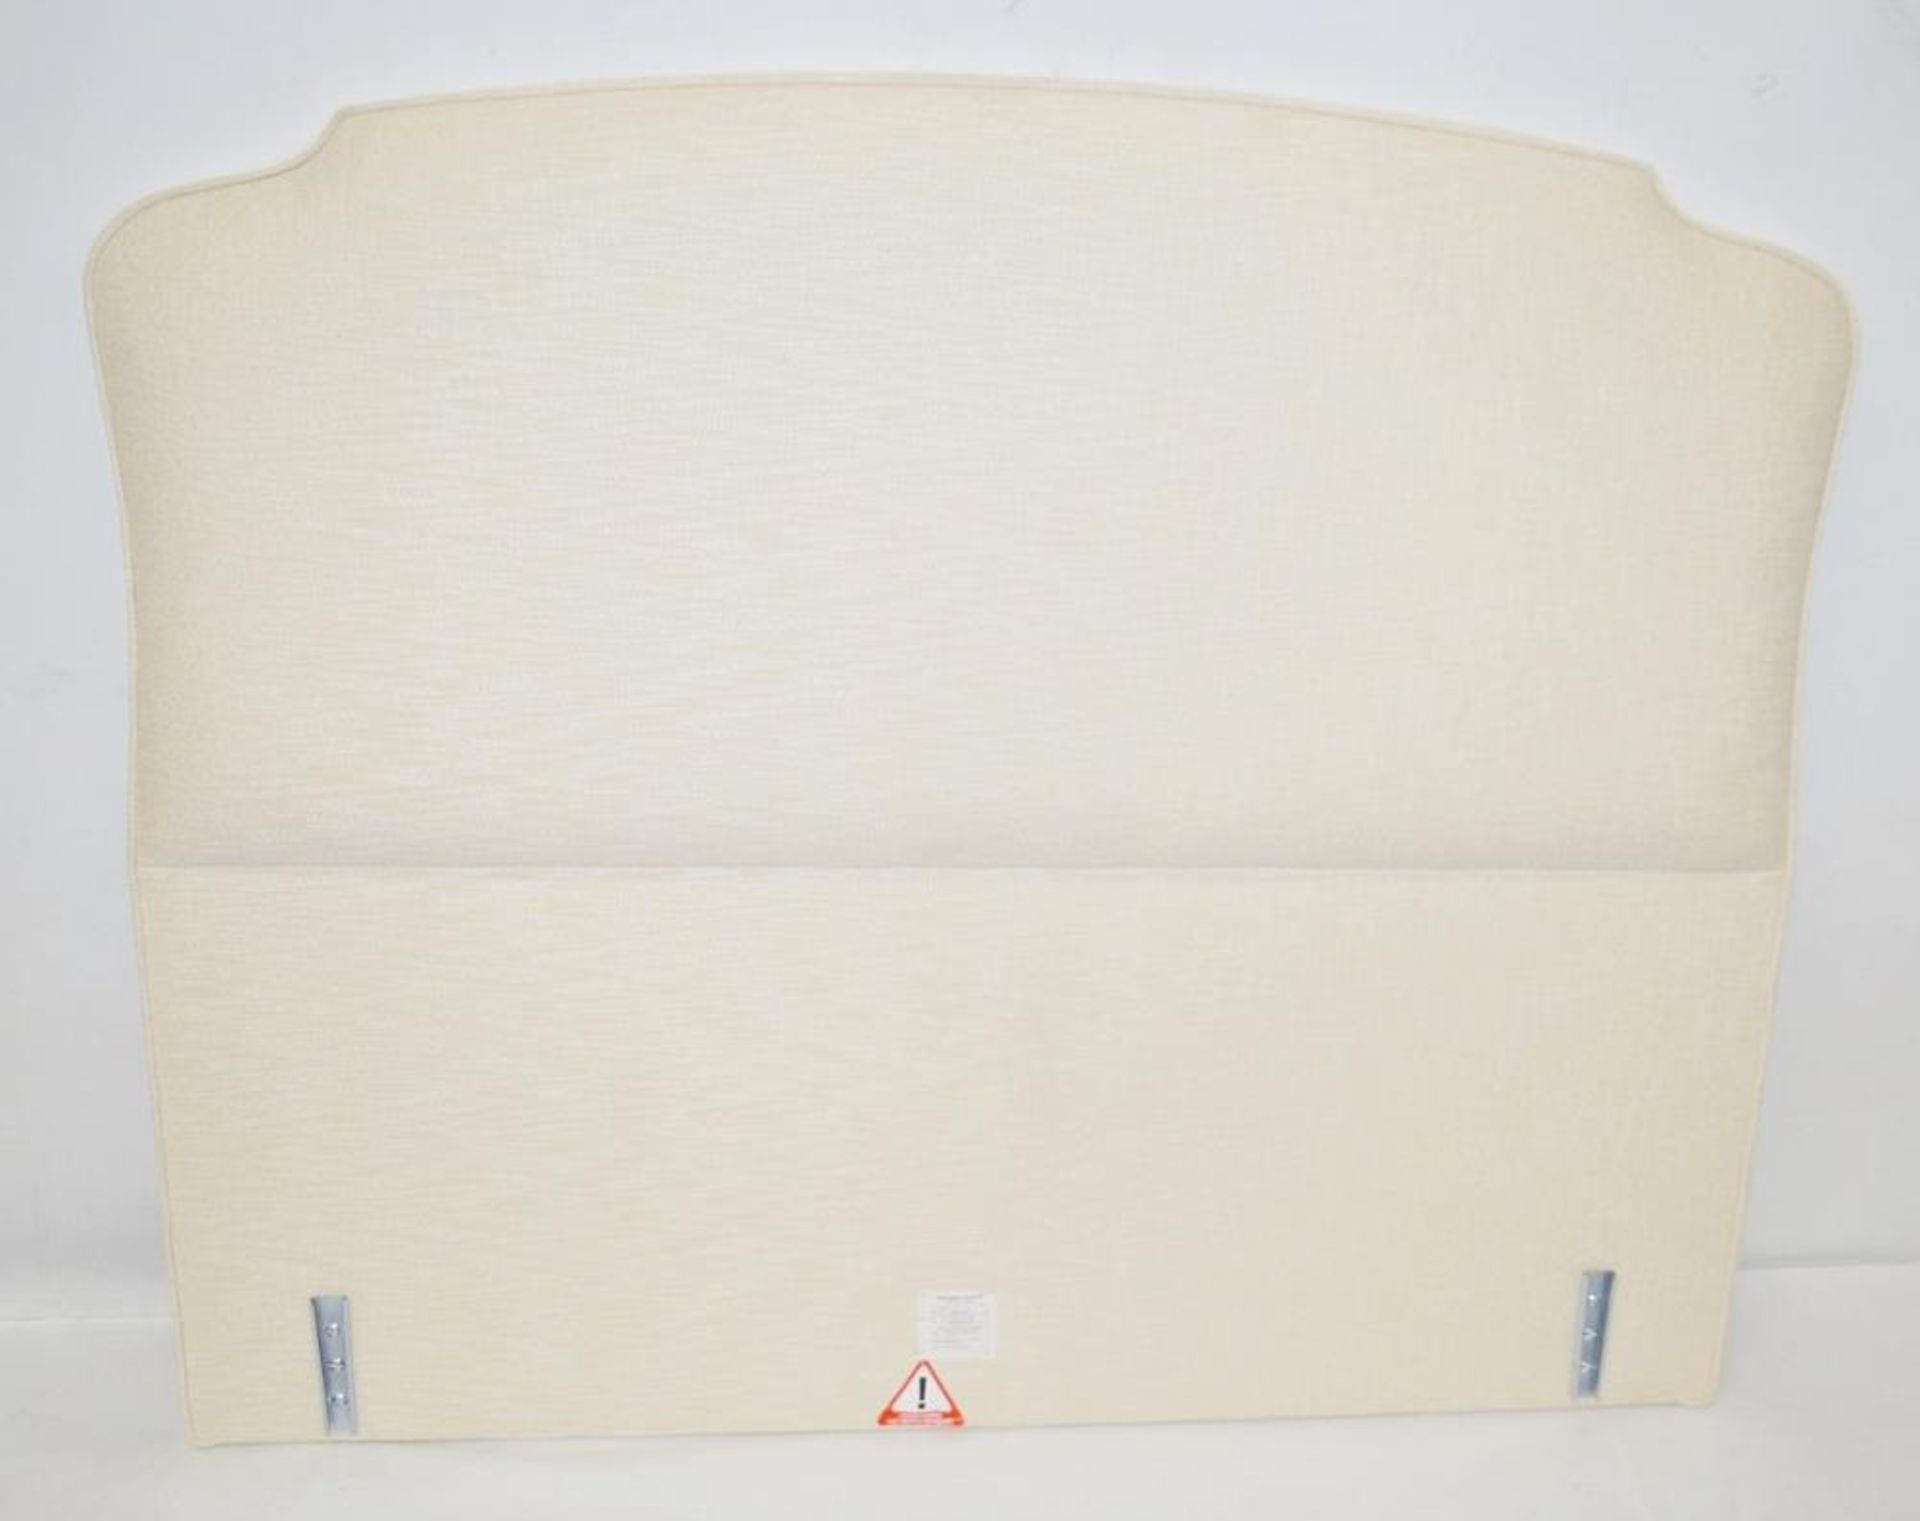 1 x VISPRING 'Eccleston' Luxury King Size Upholsted Headboard In A Premium Light Cream Fabric - Hand - Image 2 of 5